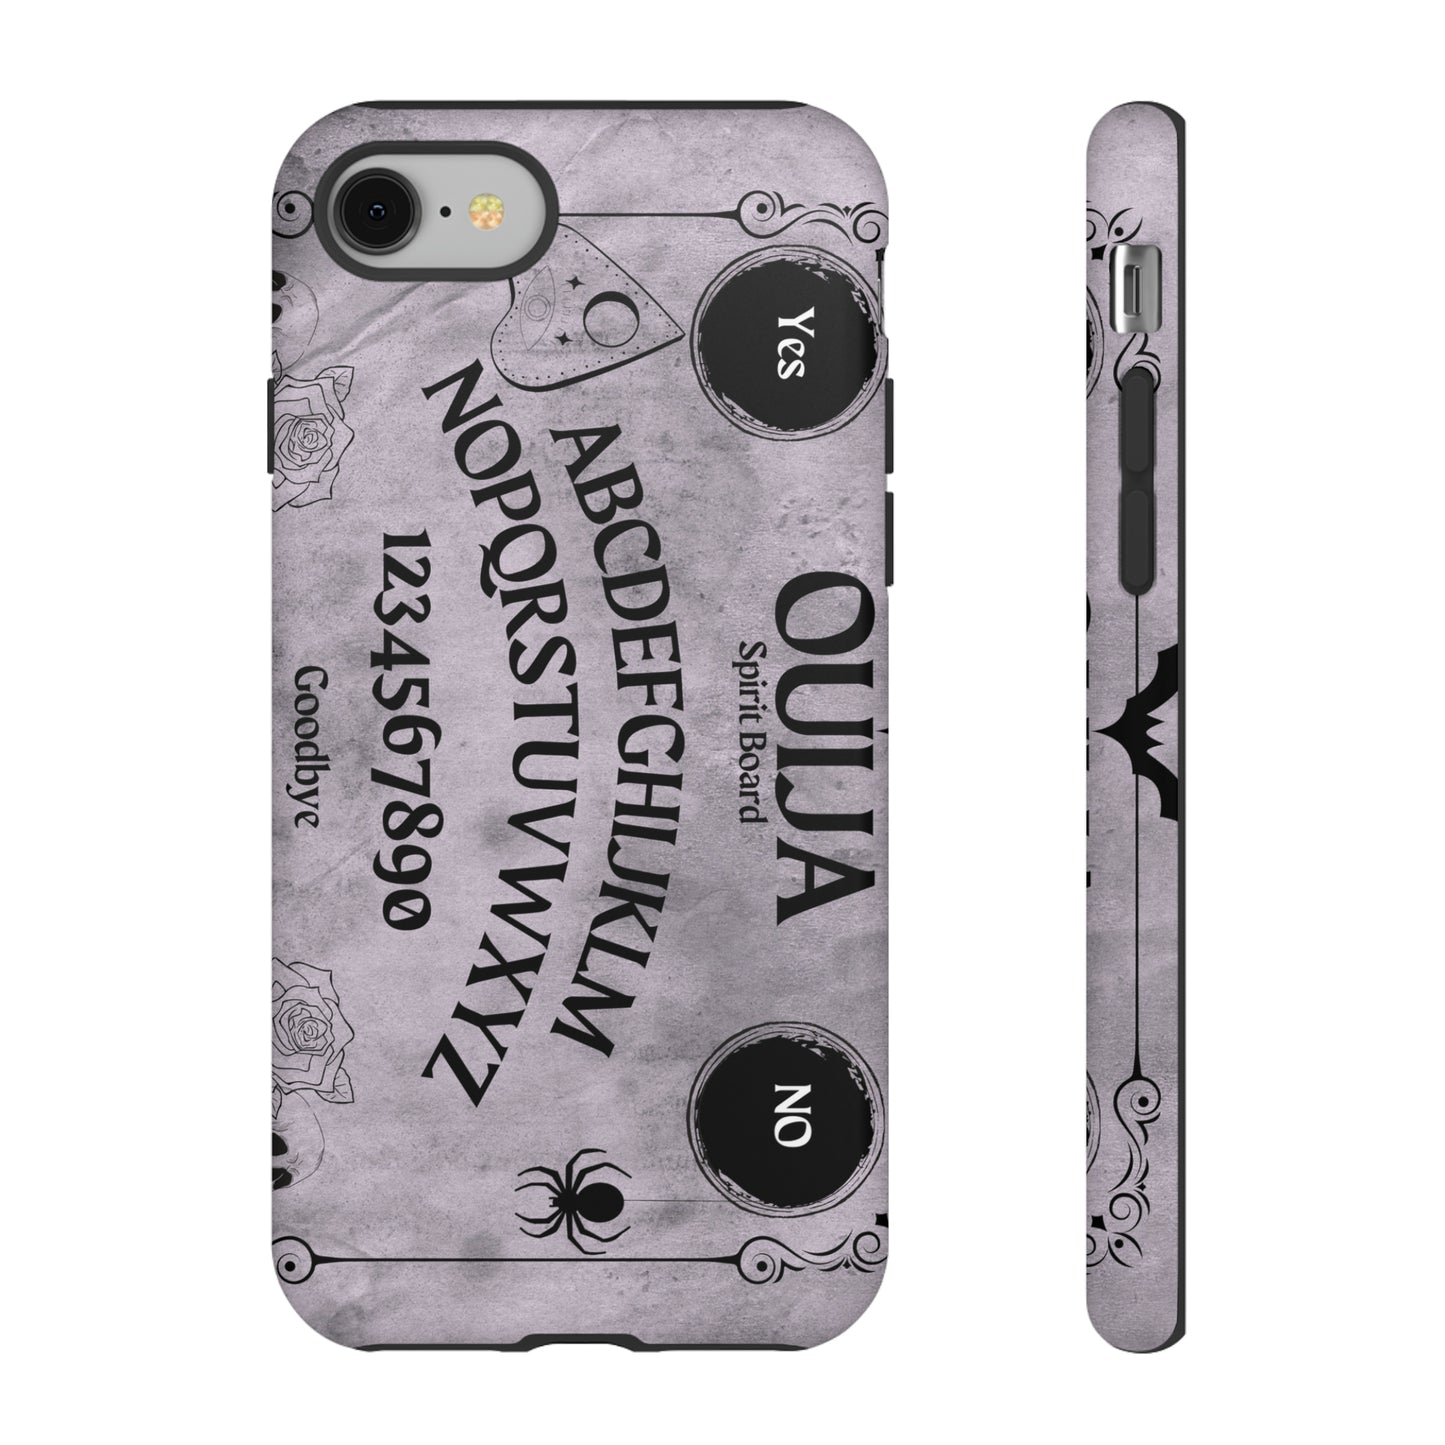 Ouija Board Tough Phone Cases For Samsung iPhone GooglePhone CaseVTZdesignsiPhone 8MatteAccessoriesGlossyhalloween